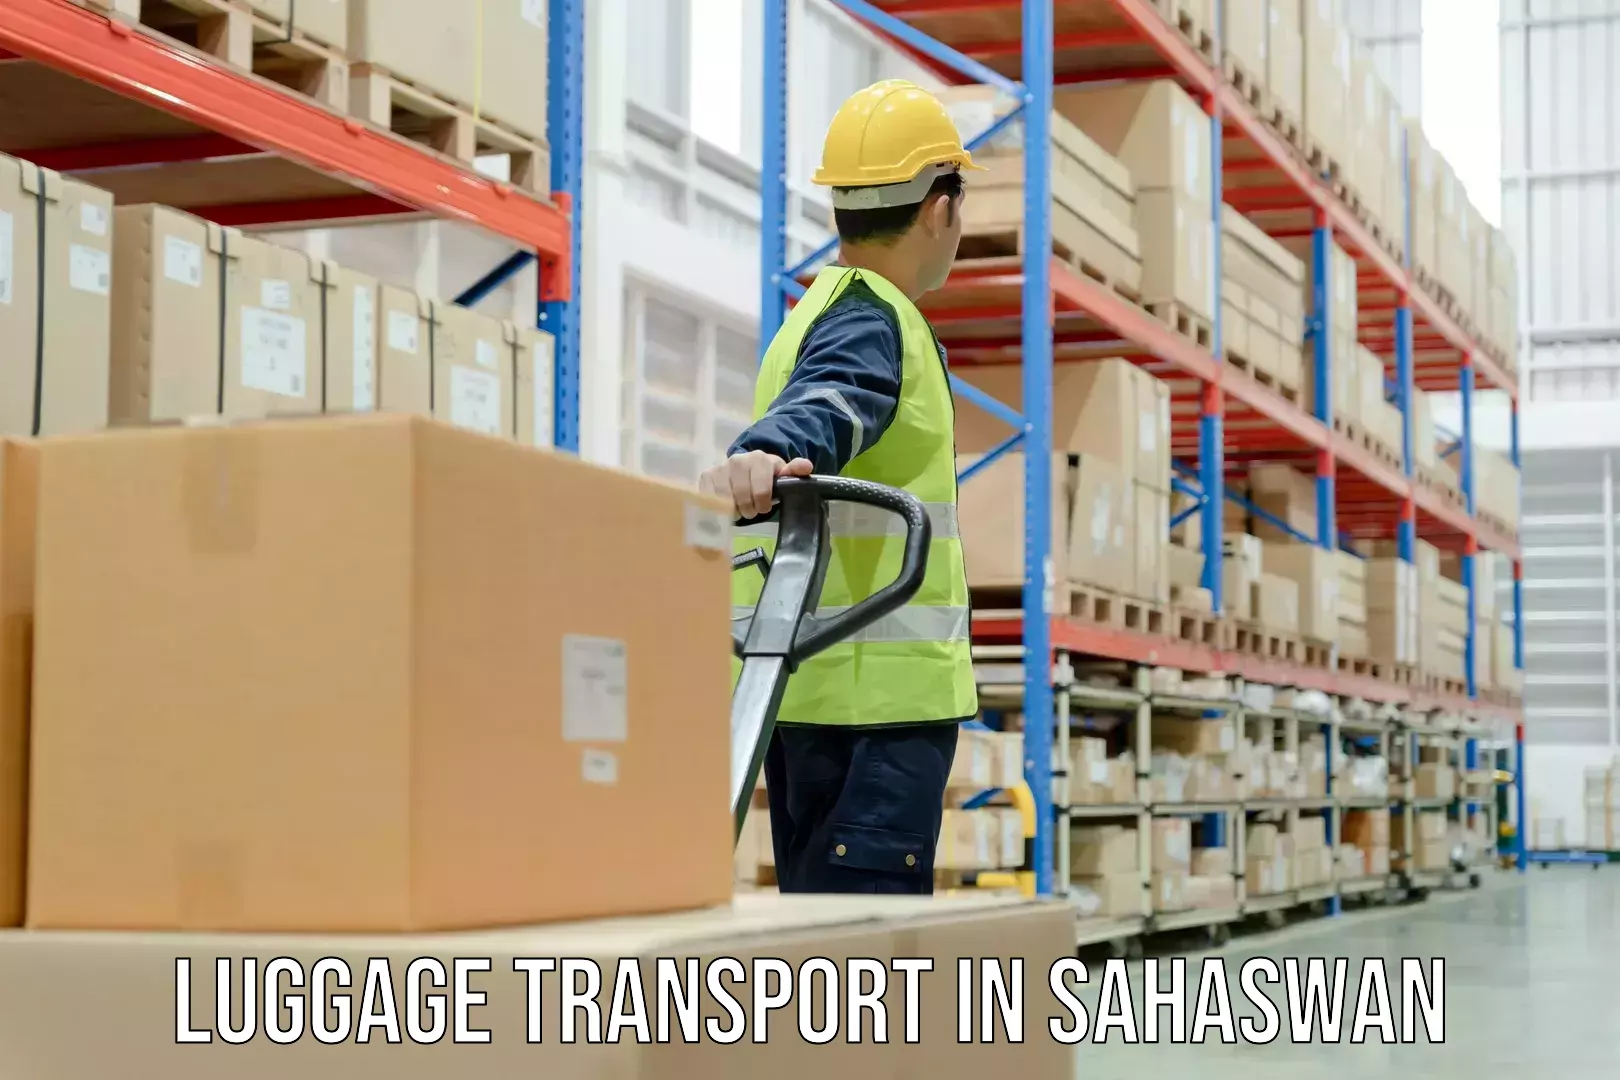 Domestic luggage transport in Sahaswan